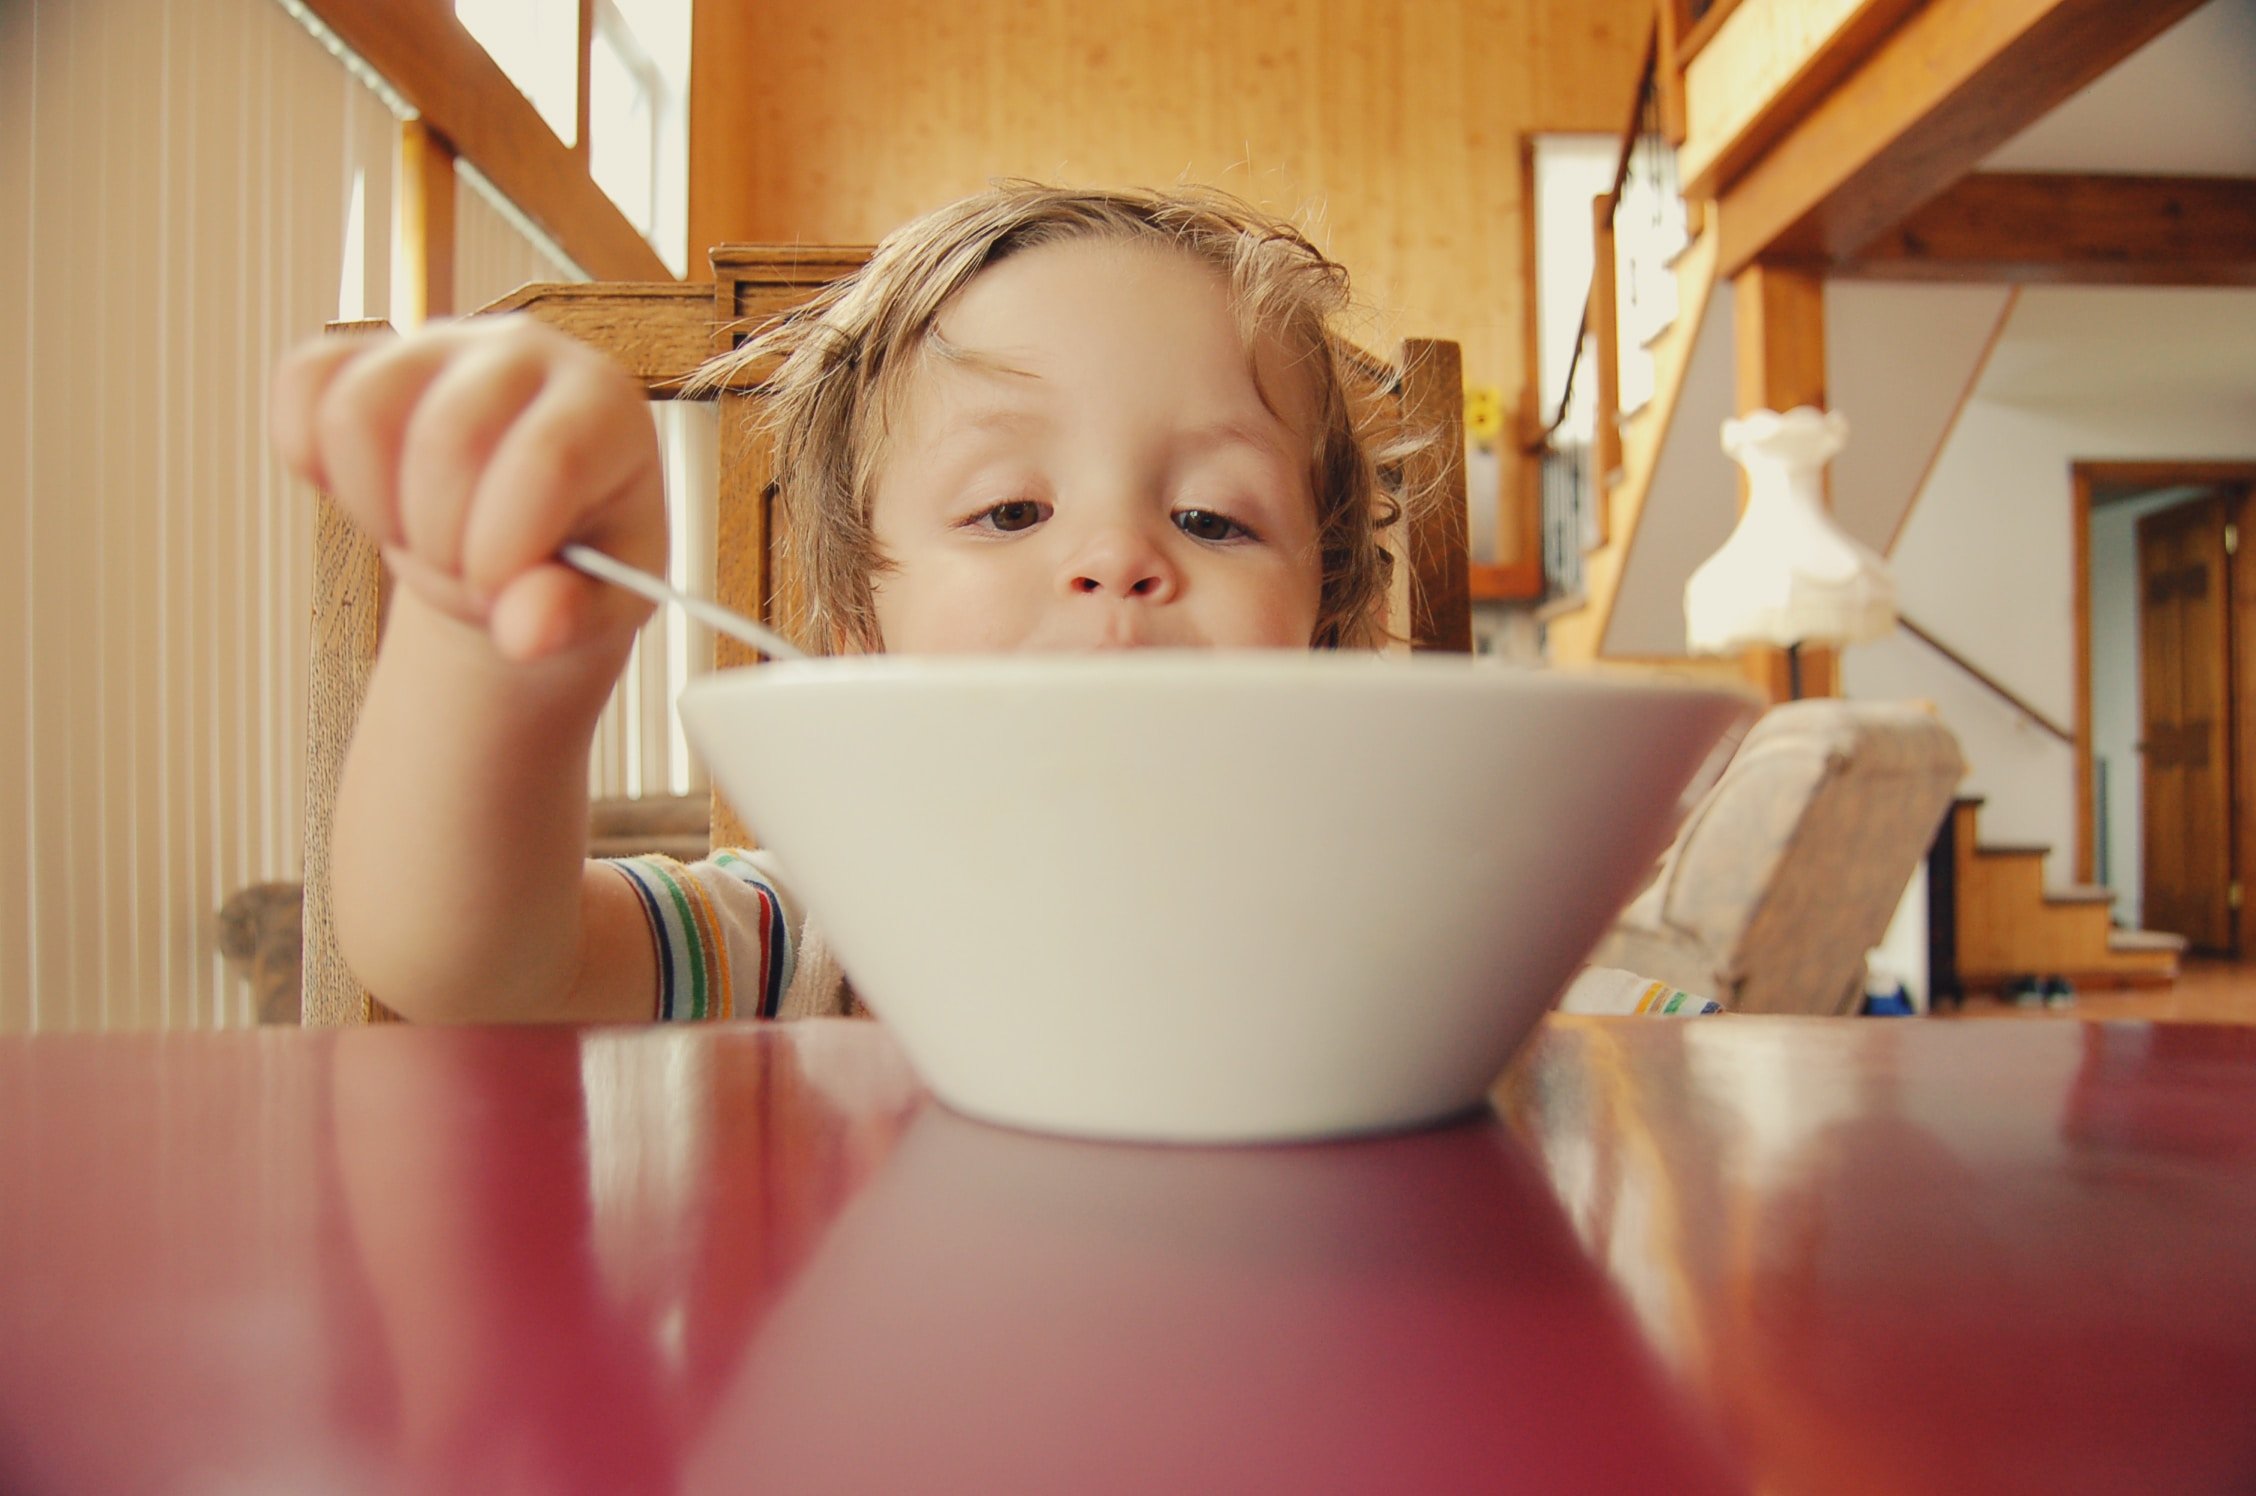 A child eating | Source: Unsplash.com